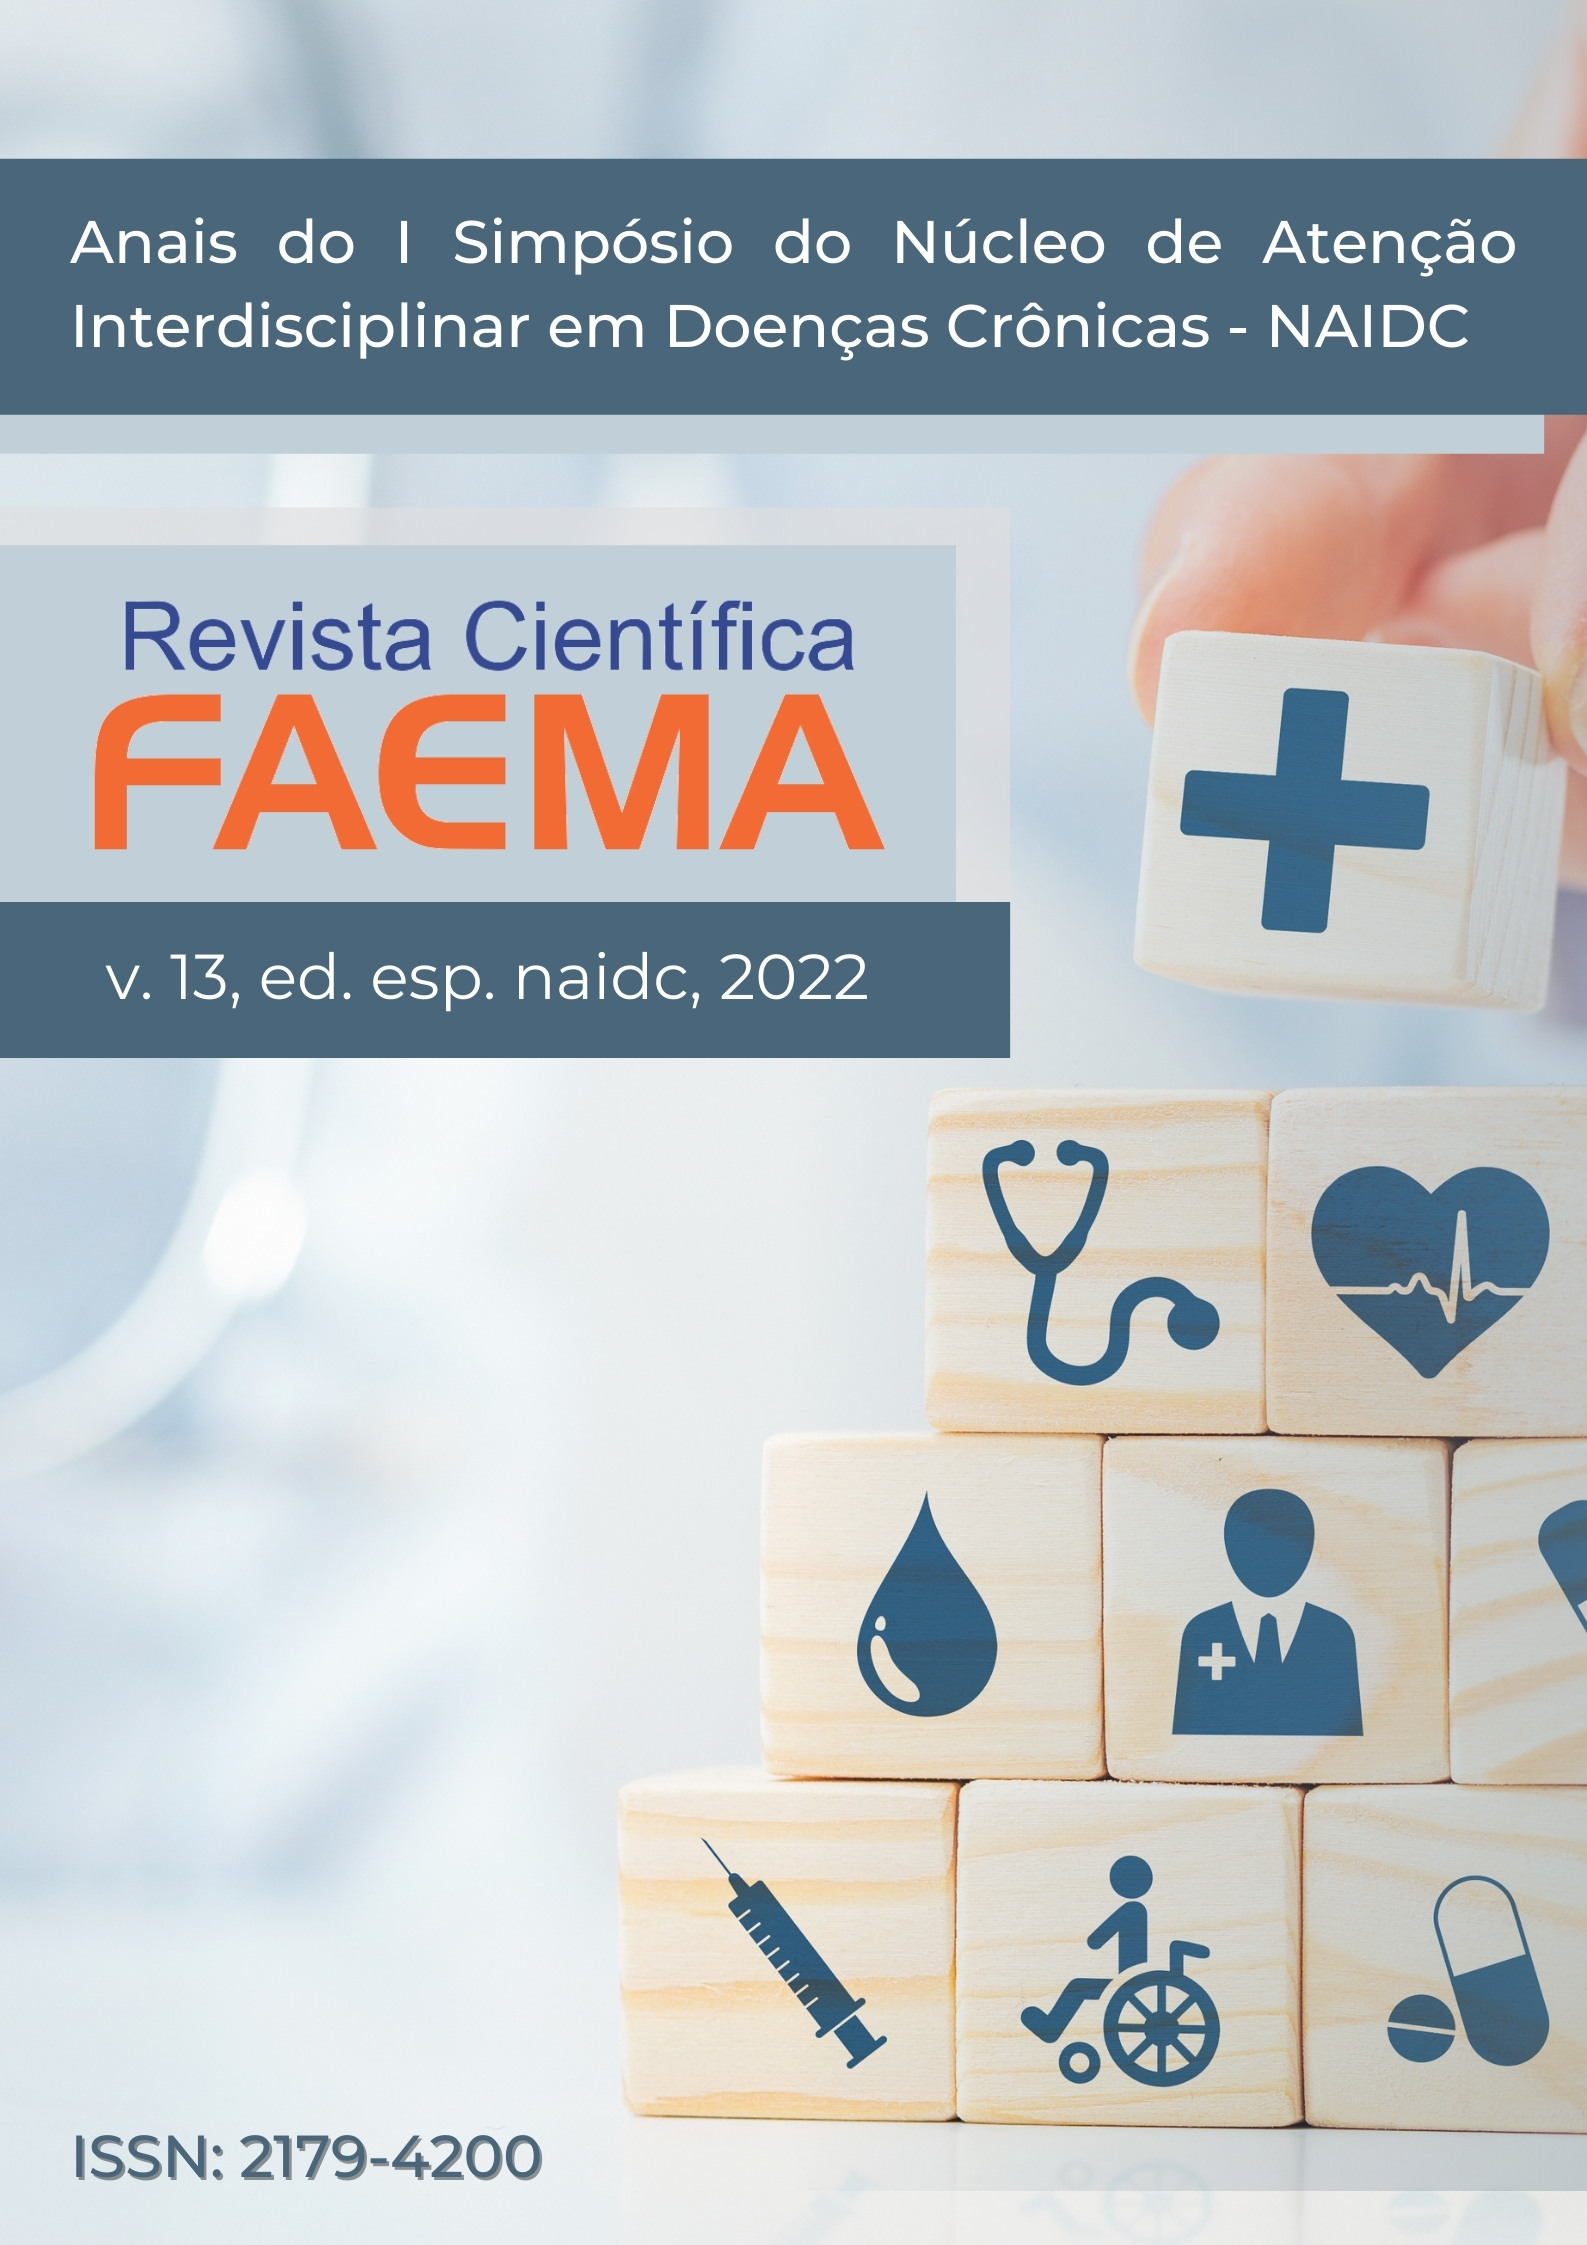 Revista Científica FAEMA v. 09, n. 1, jan./jun. 2018 - biblioteca